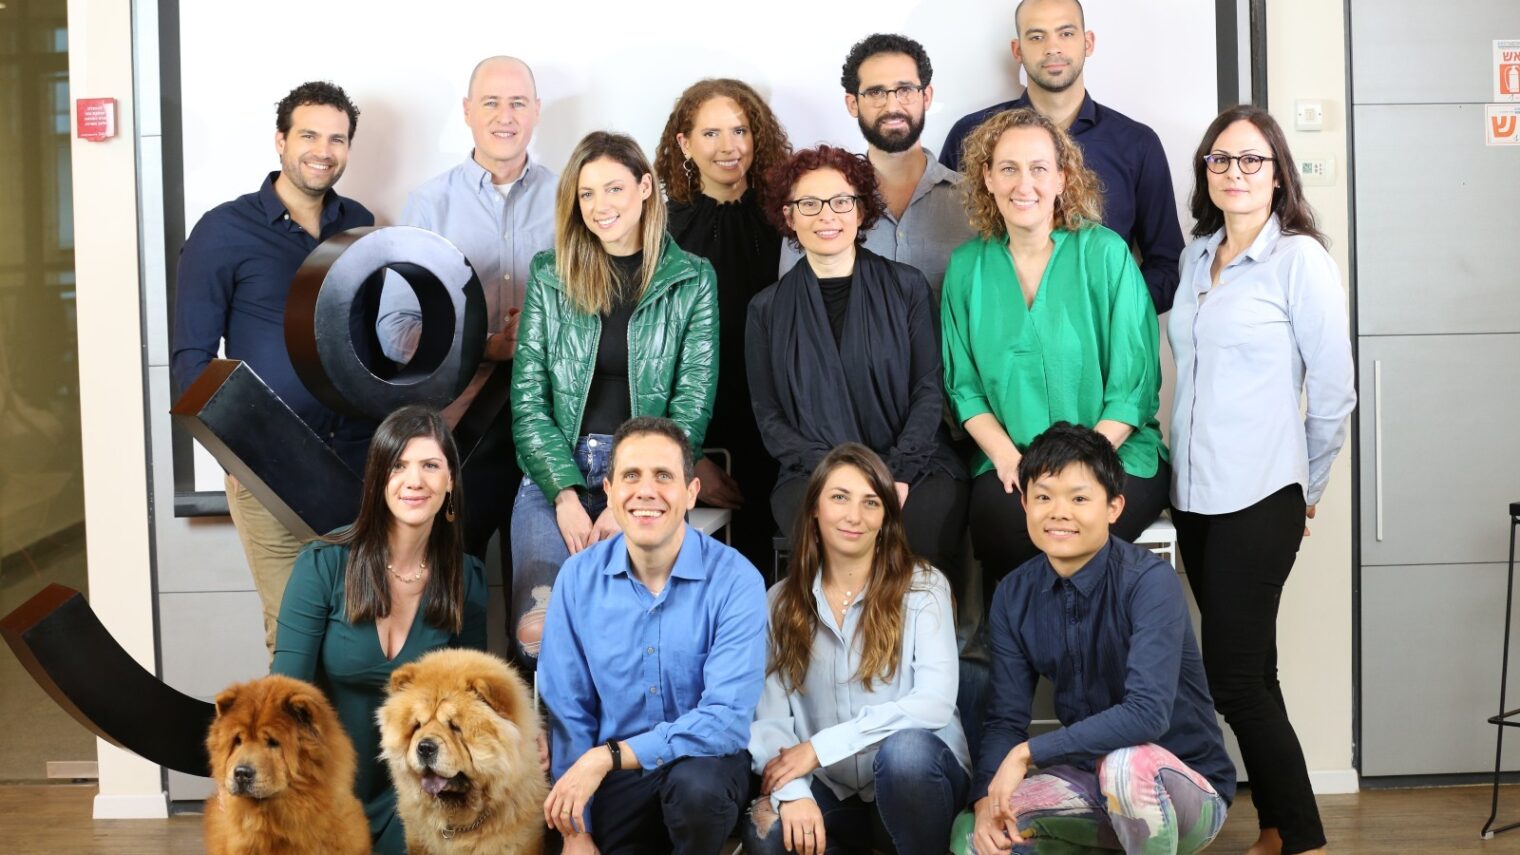 The Joy Ventures team. CEO Miri Polachek is in the green blouse.